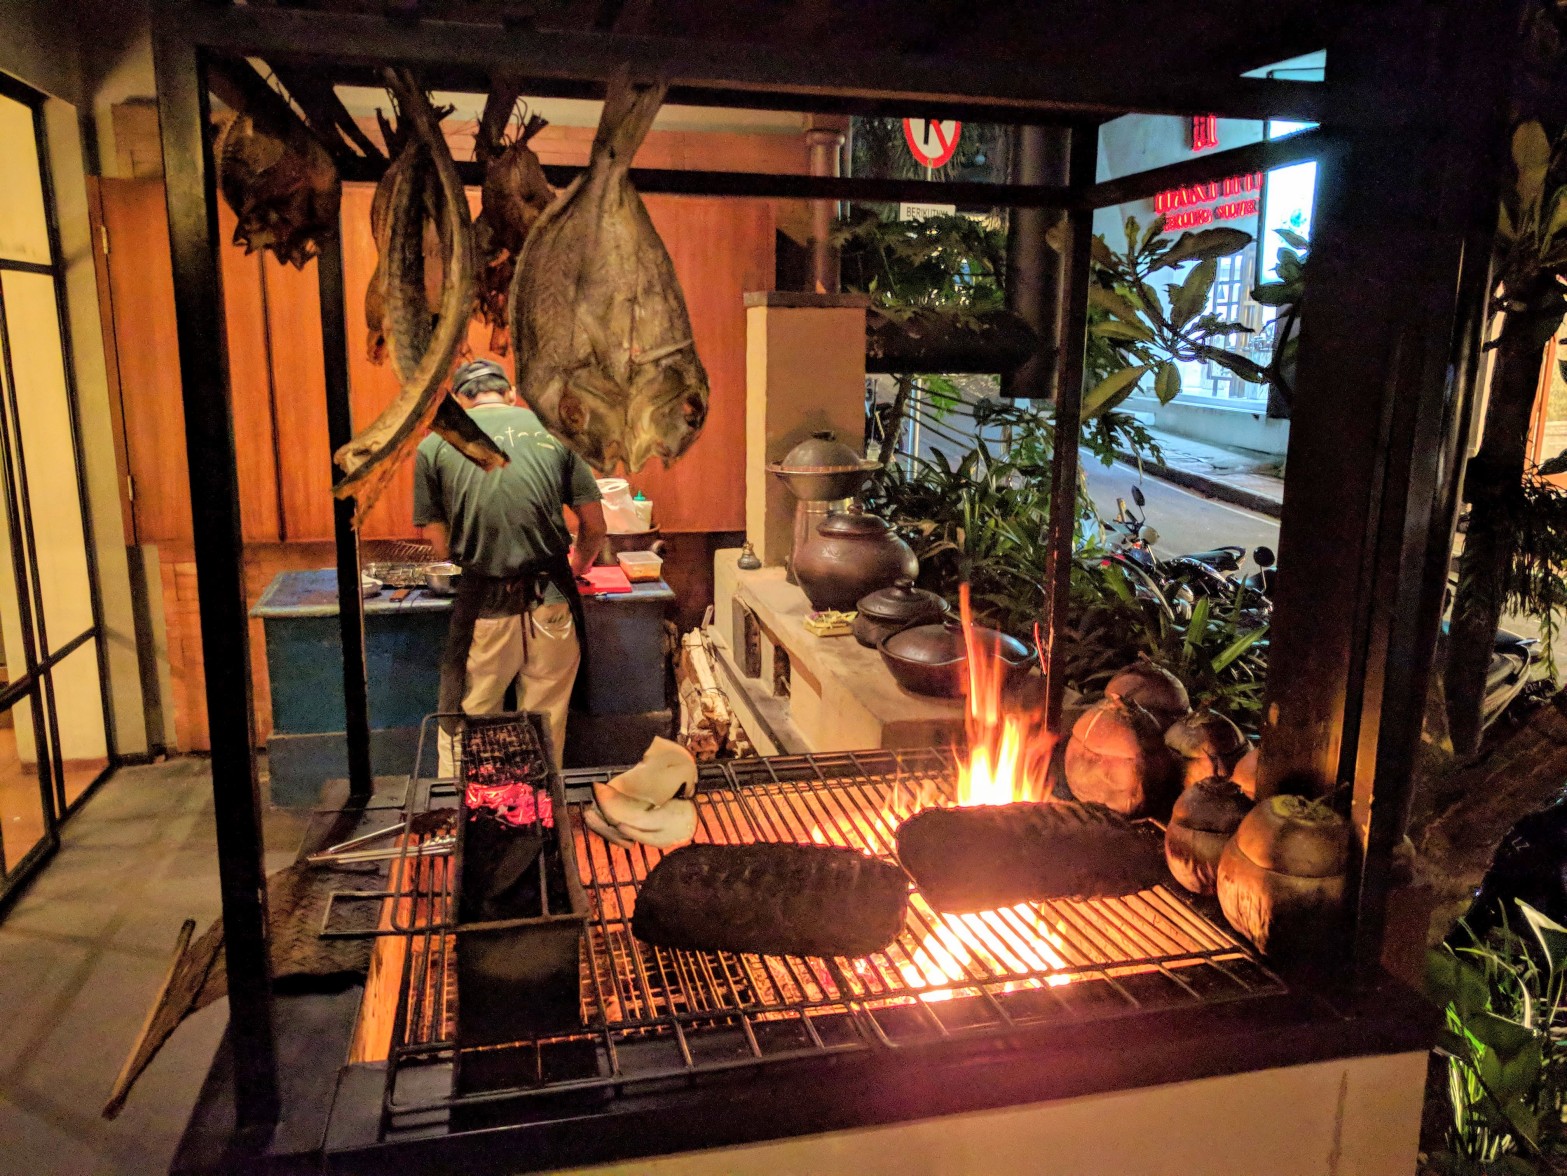 Nusantara outdoor grill